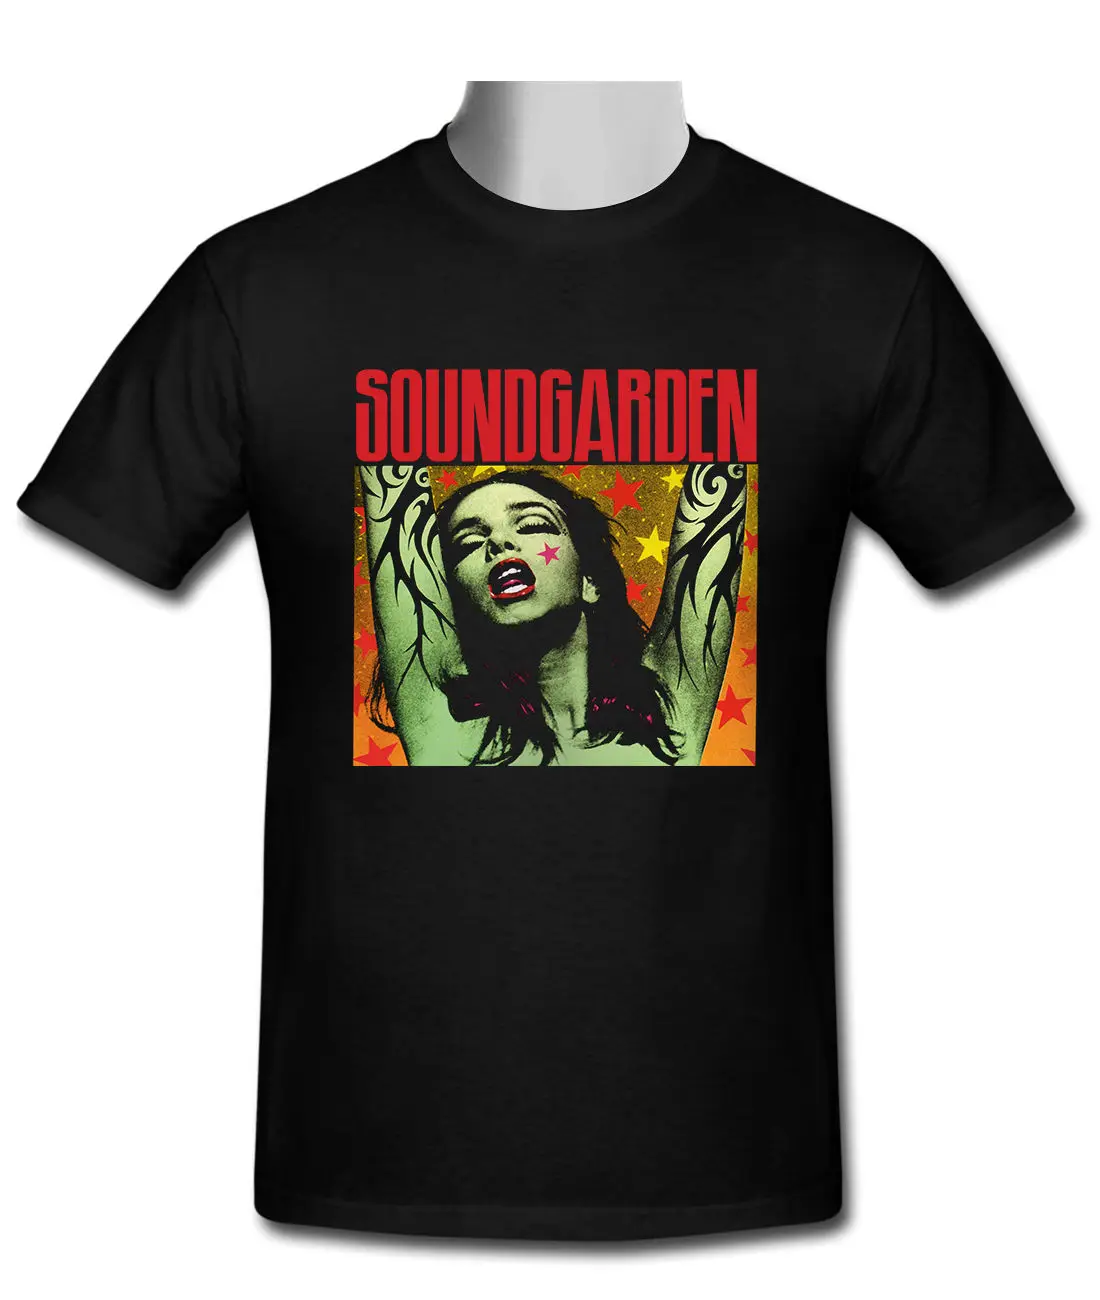 Новая Черная футболка Soundgarden Chris cornell Размер S до 3XL | Мужская одежда